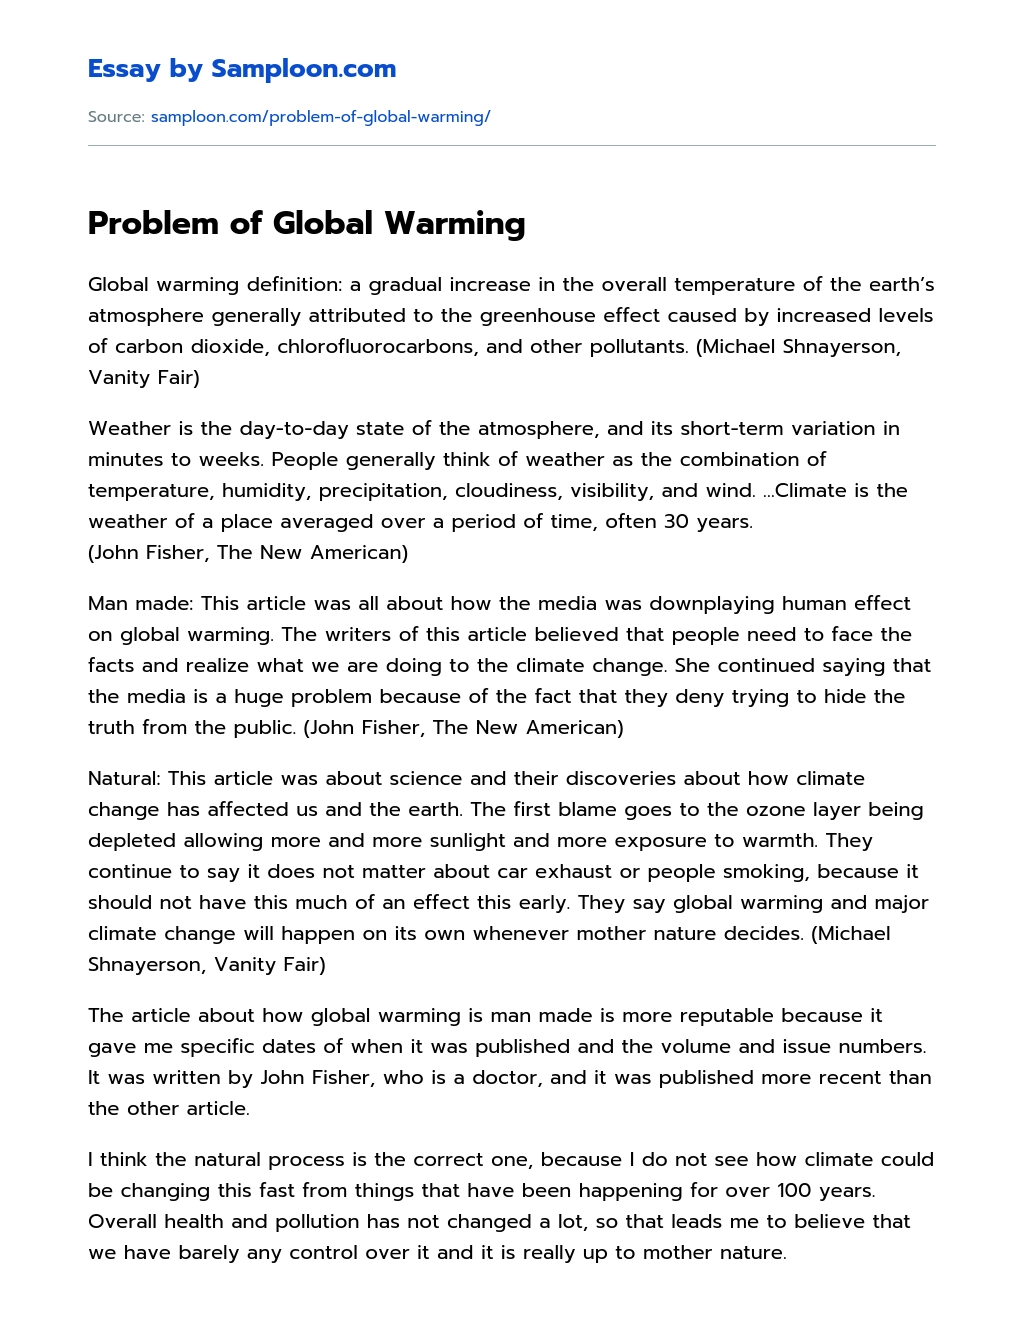 short essay on global warming